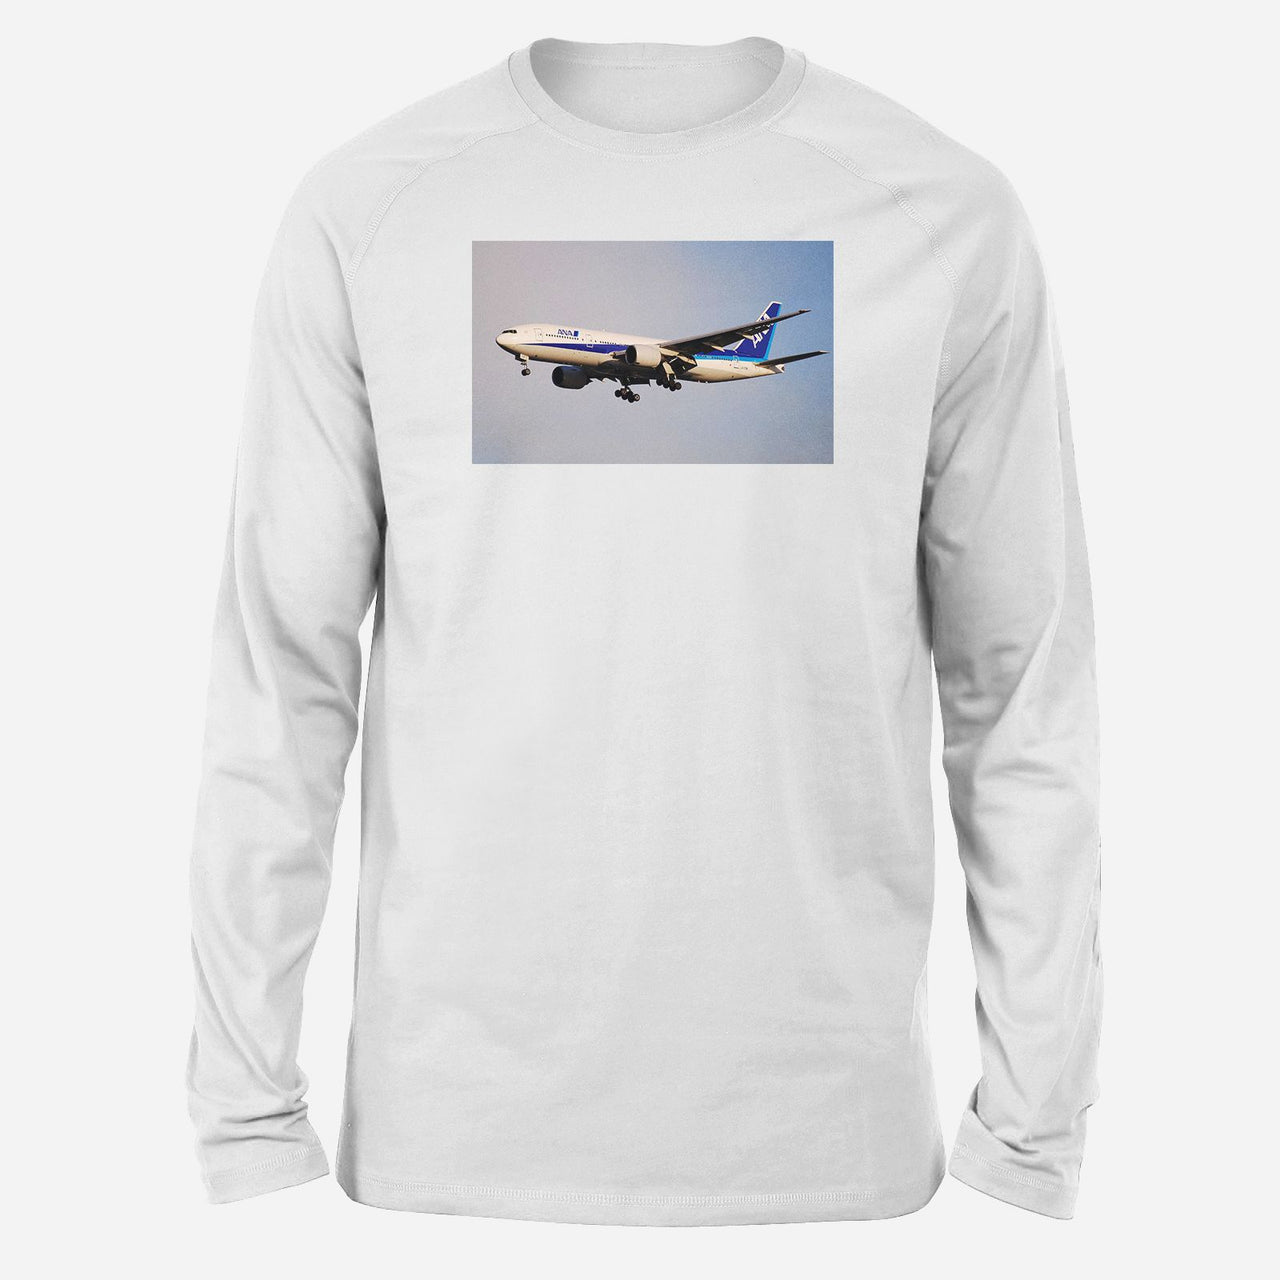 ANA's Boeing 777 Designed Long-Sleeve T-Shirts